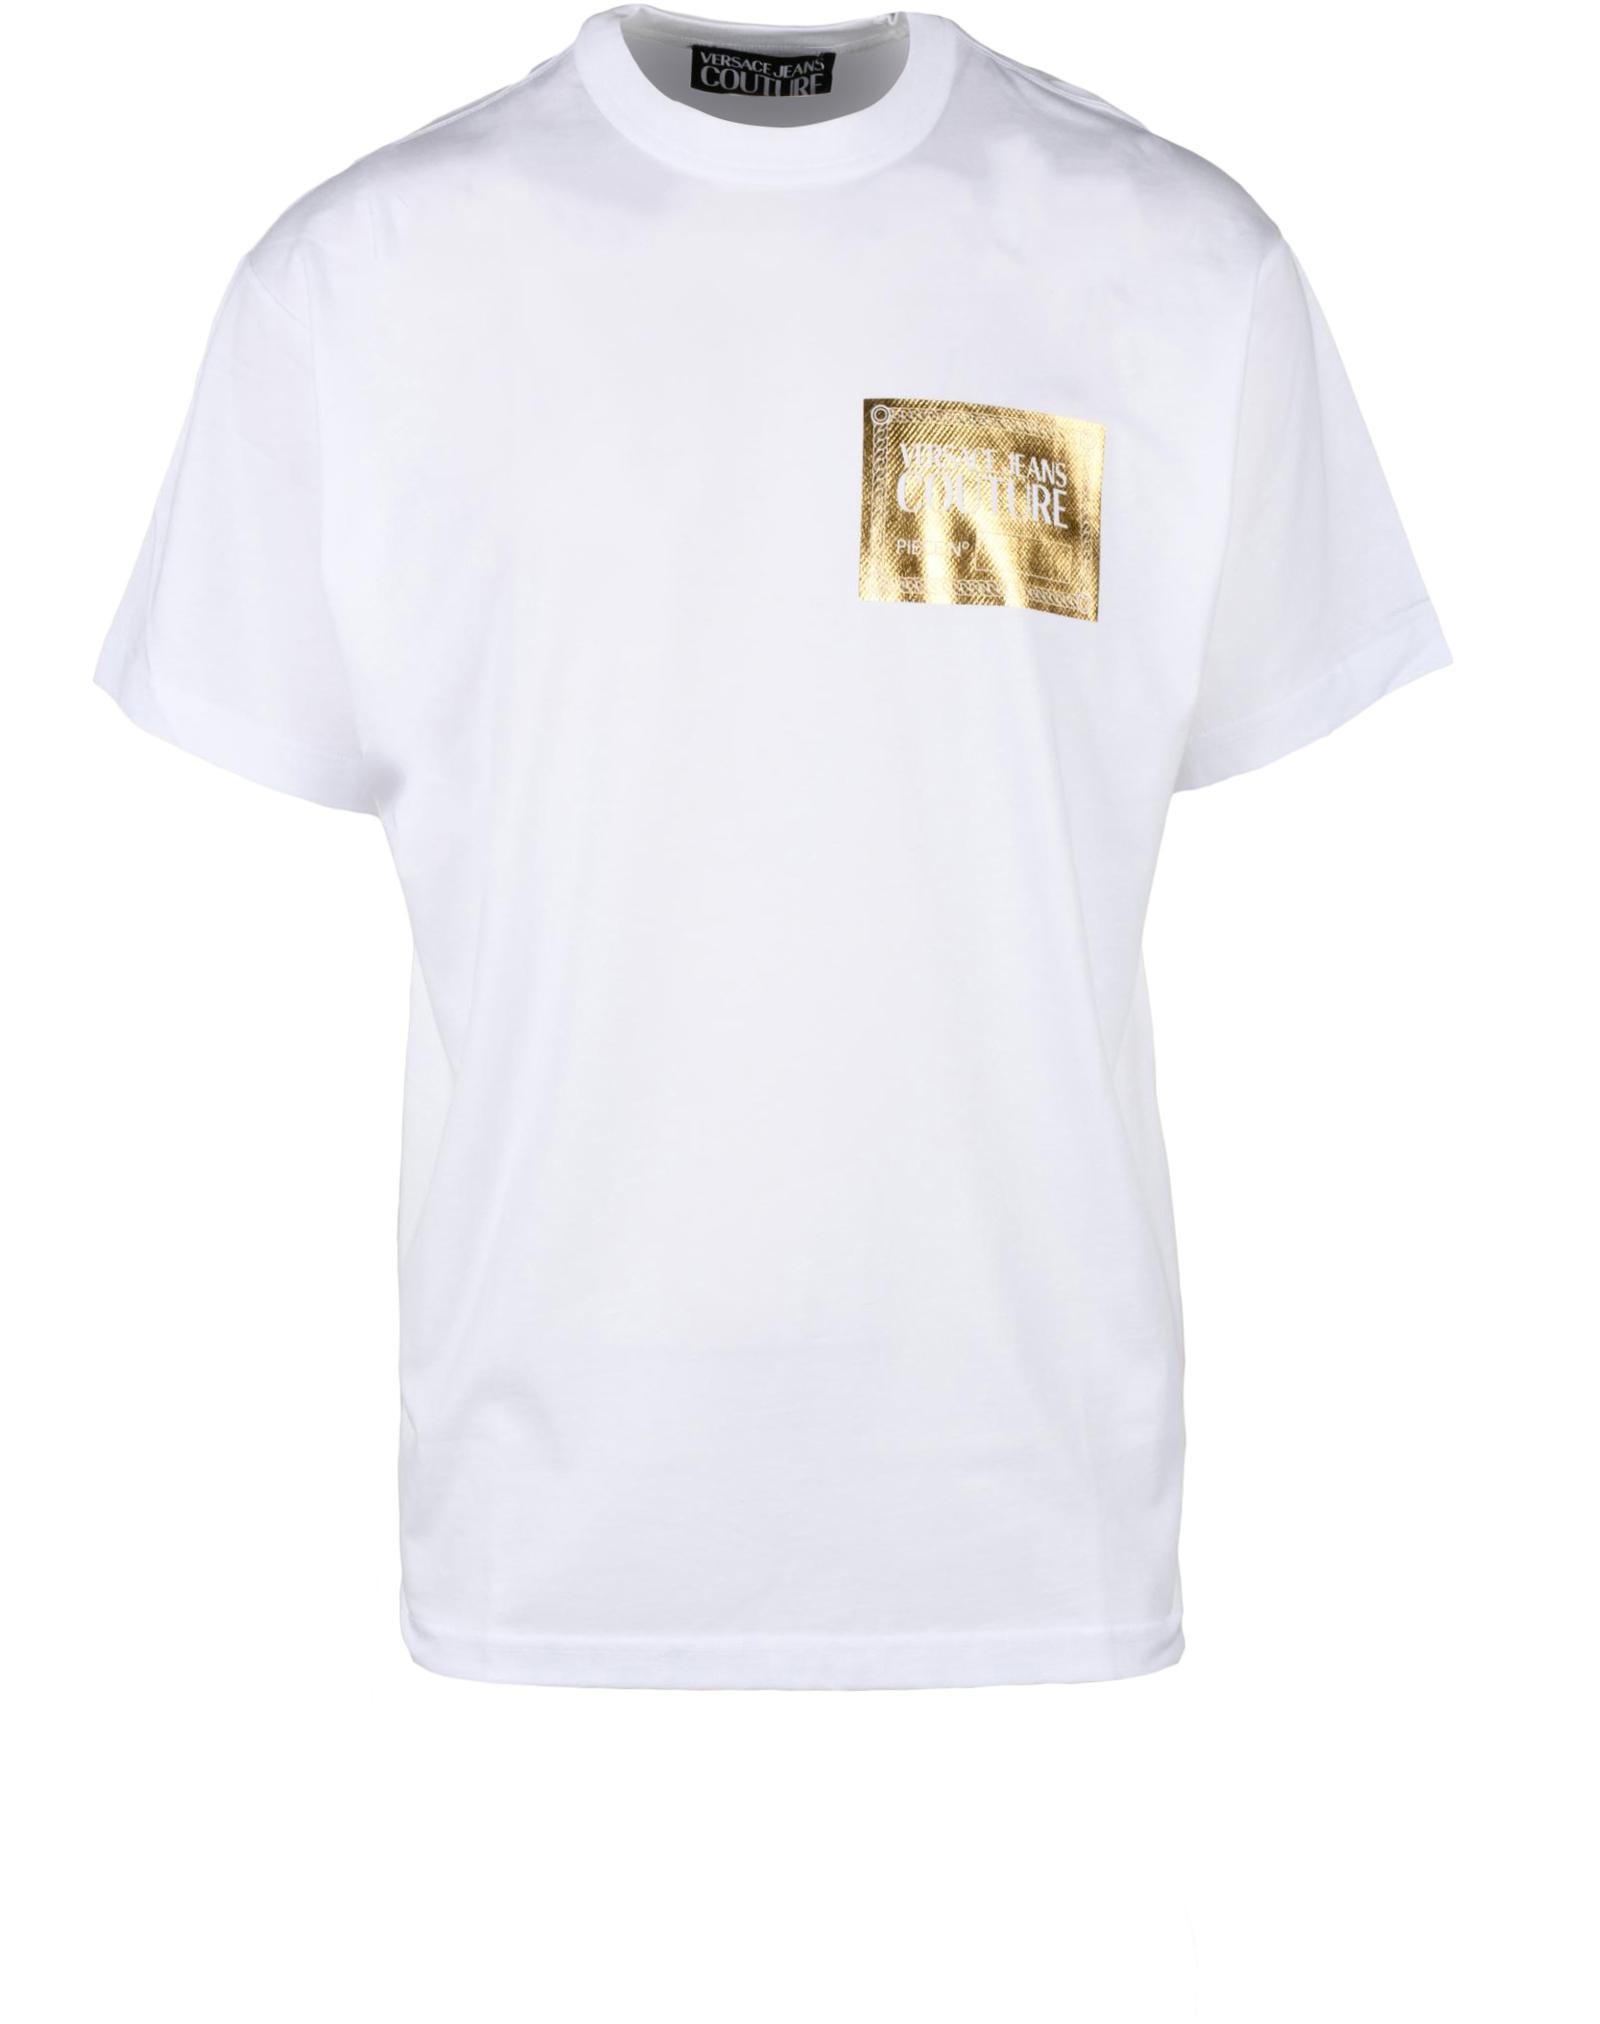 VERSACE JEANS COUTURE, White Men's T-shirt